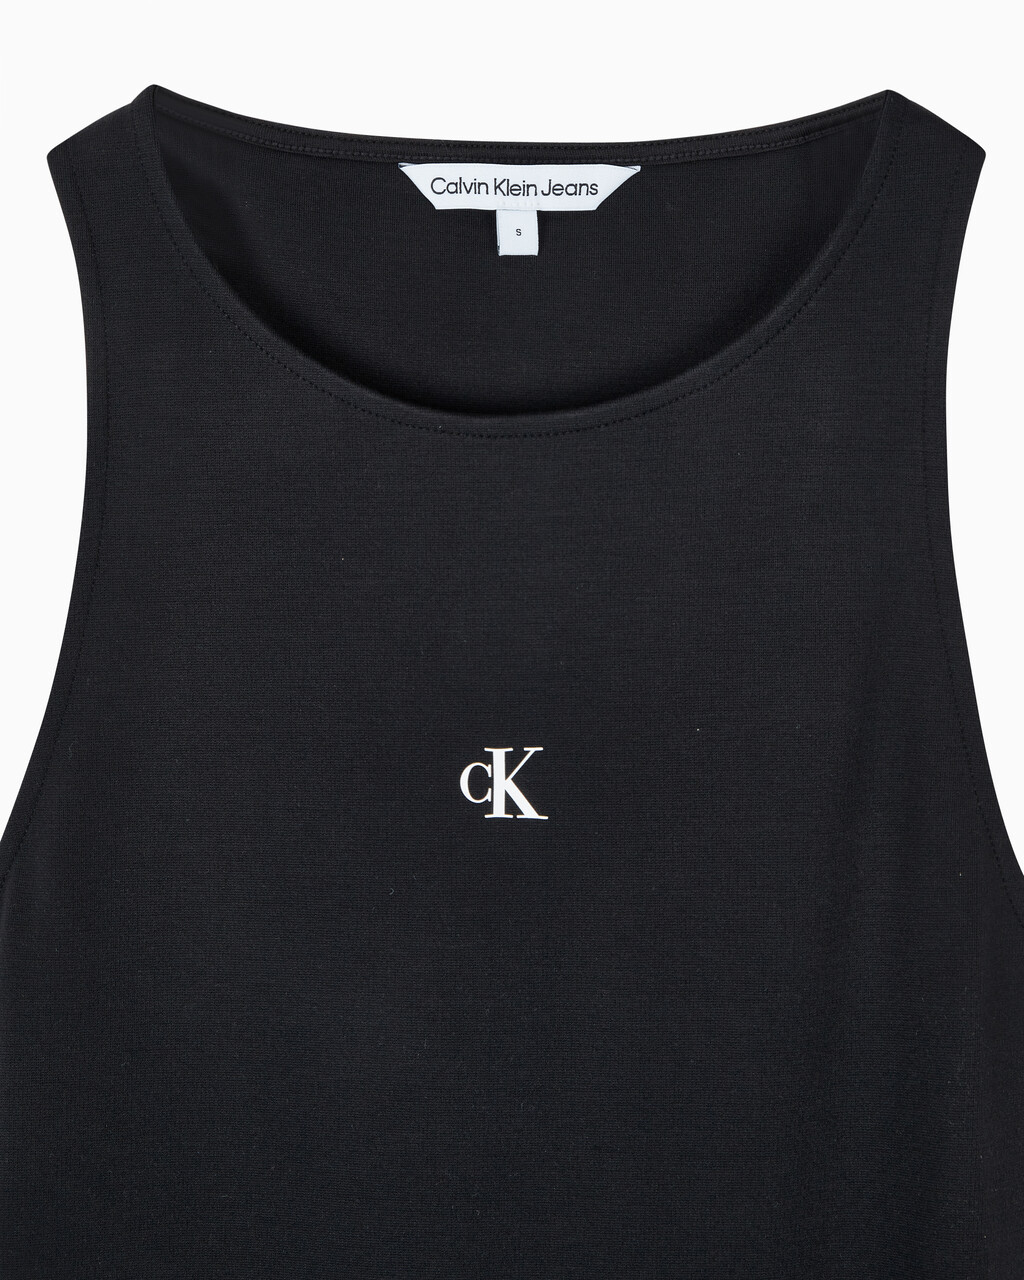 Buy 여성 레이서백 밀라노 드레스 in color CK BLACK